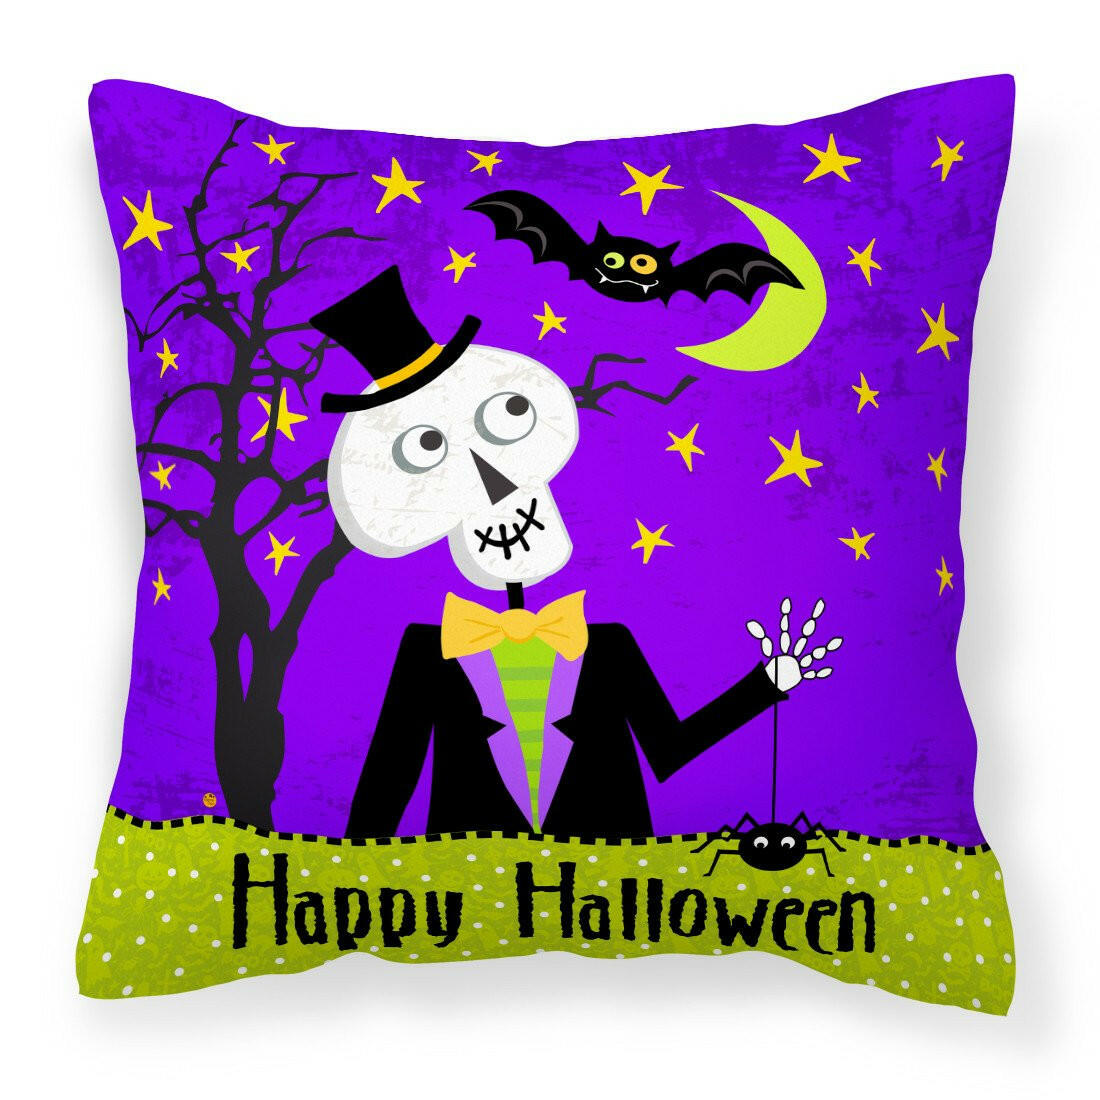 Happy Halloween Skeleton Fabric Decorative Pillow VHA3014PW1414 by Caroline's Treasures